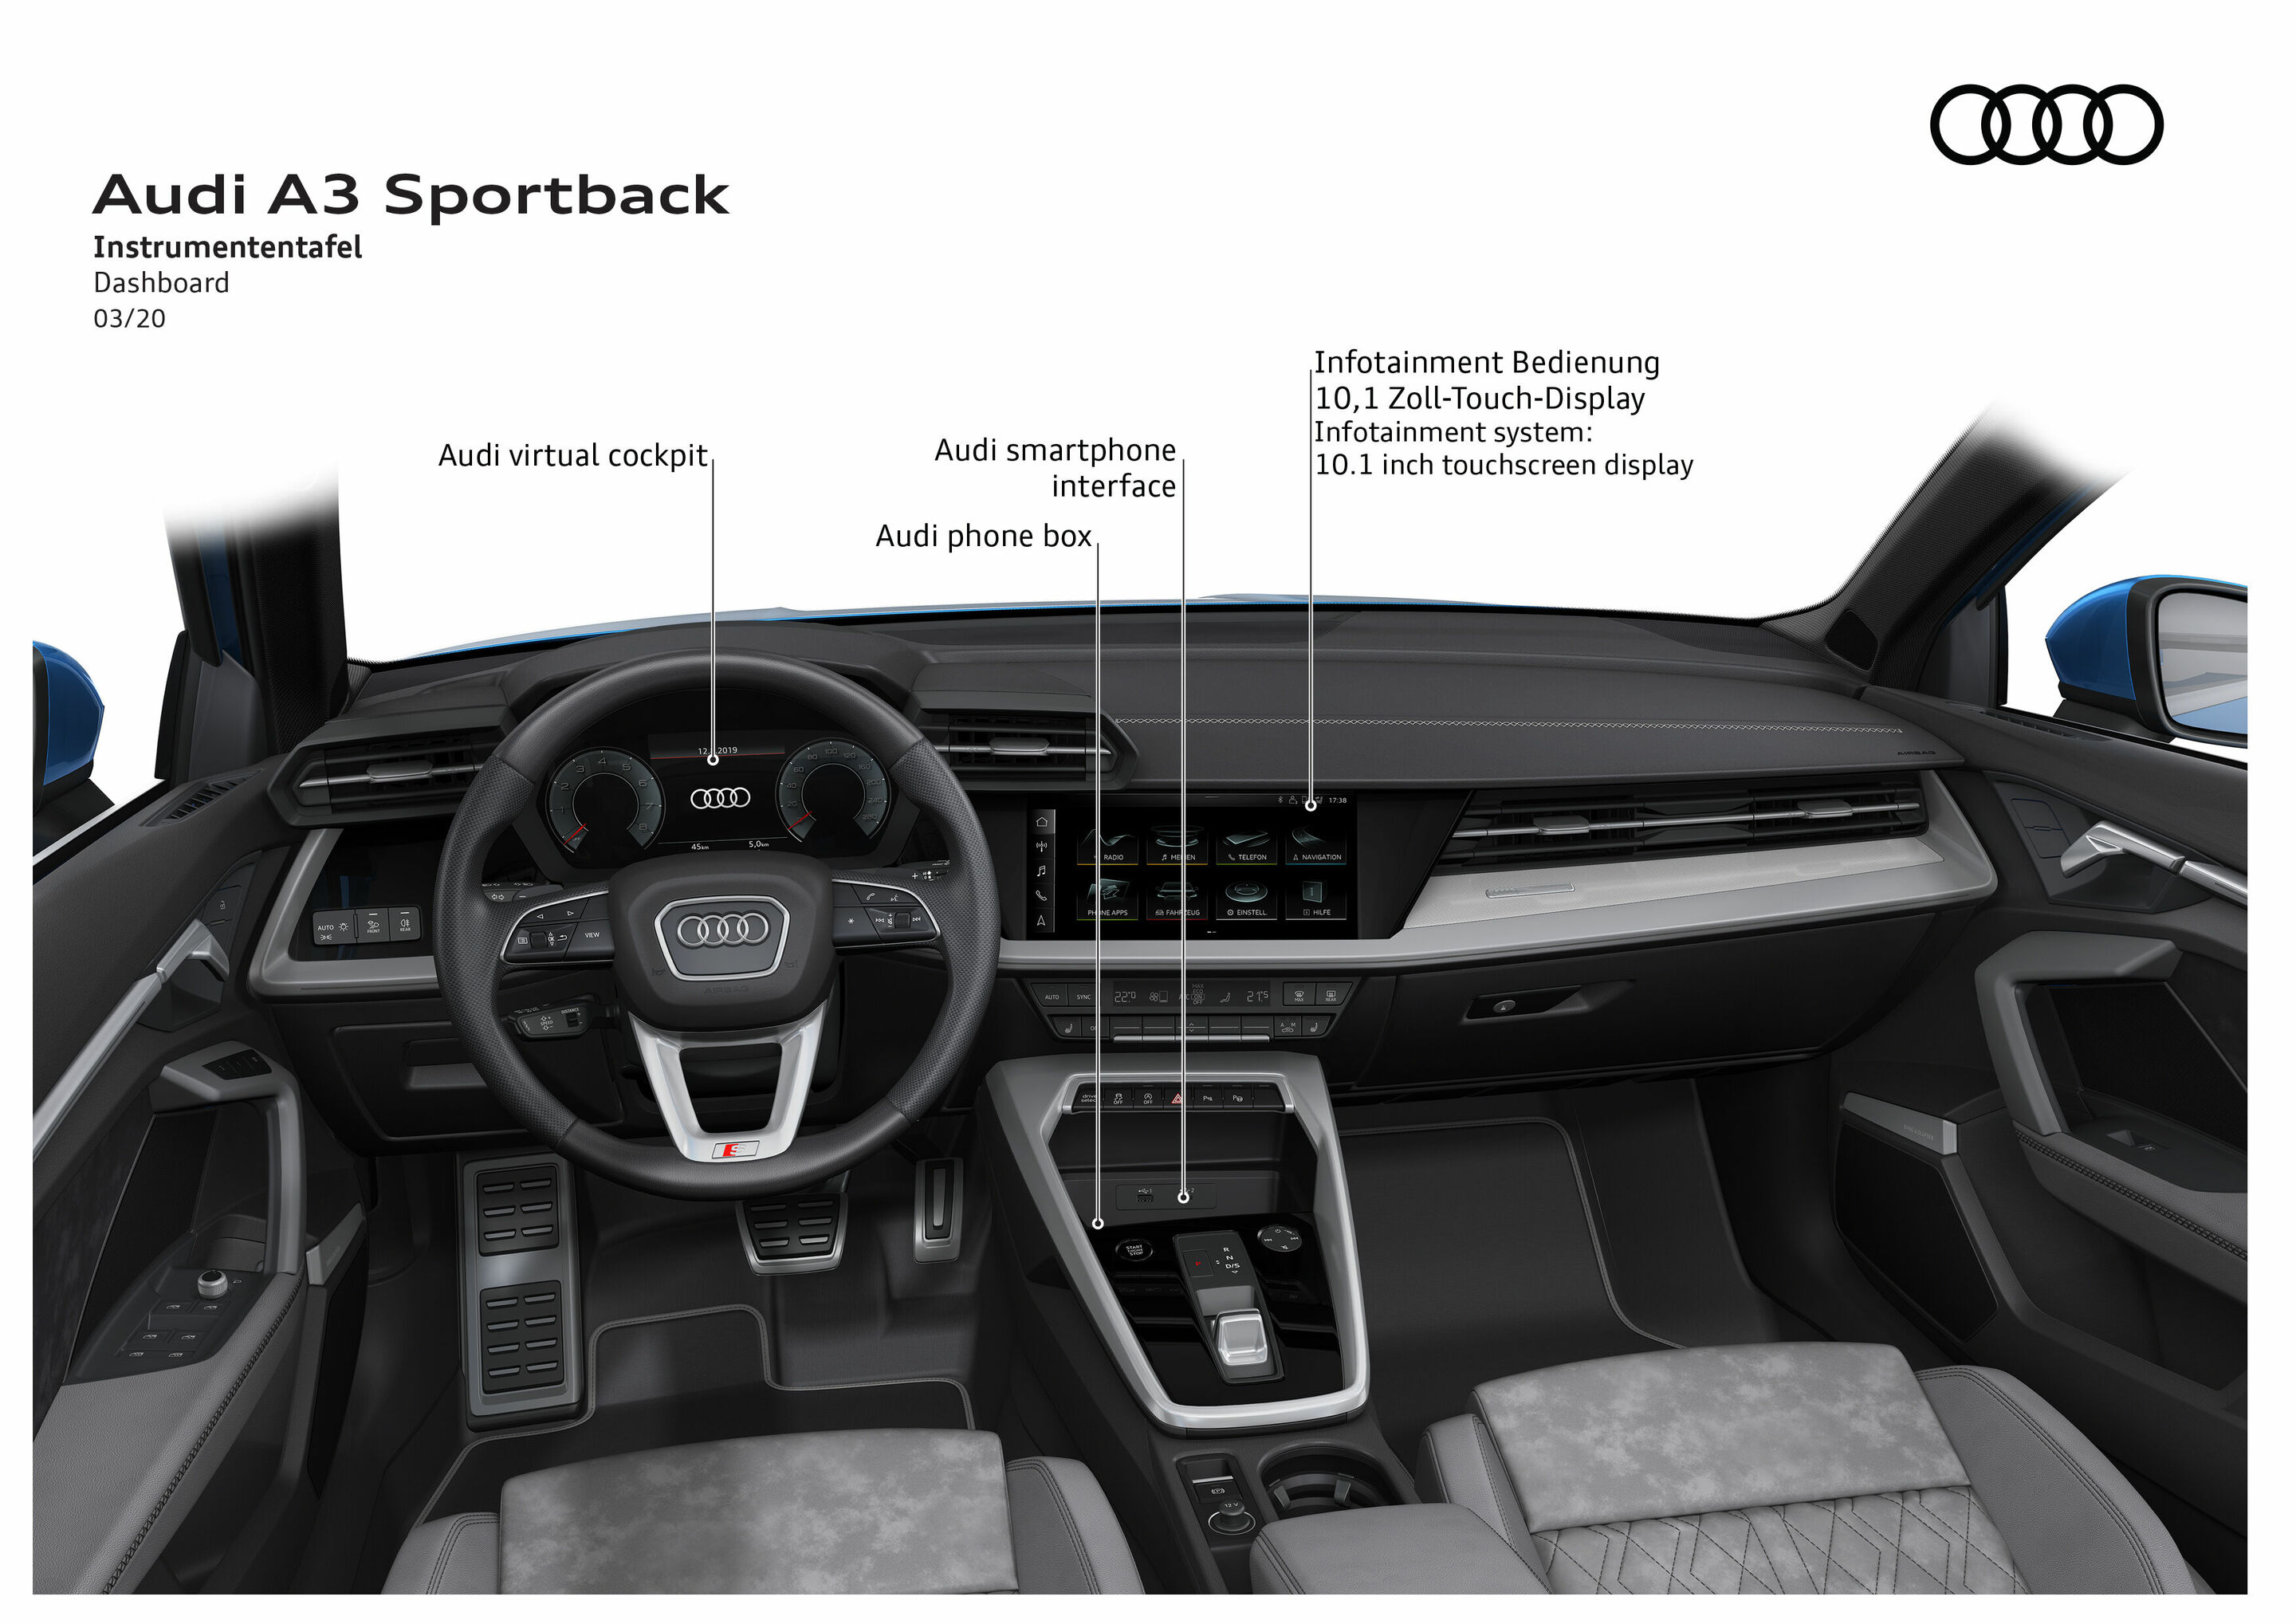 Head-up display - Audi Technology Portal